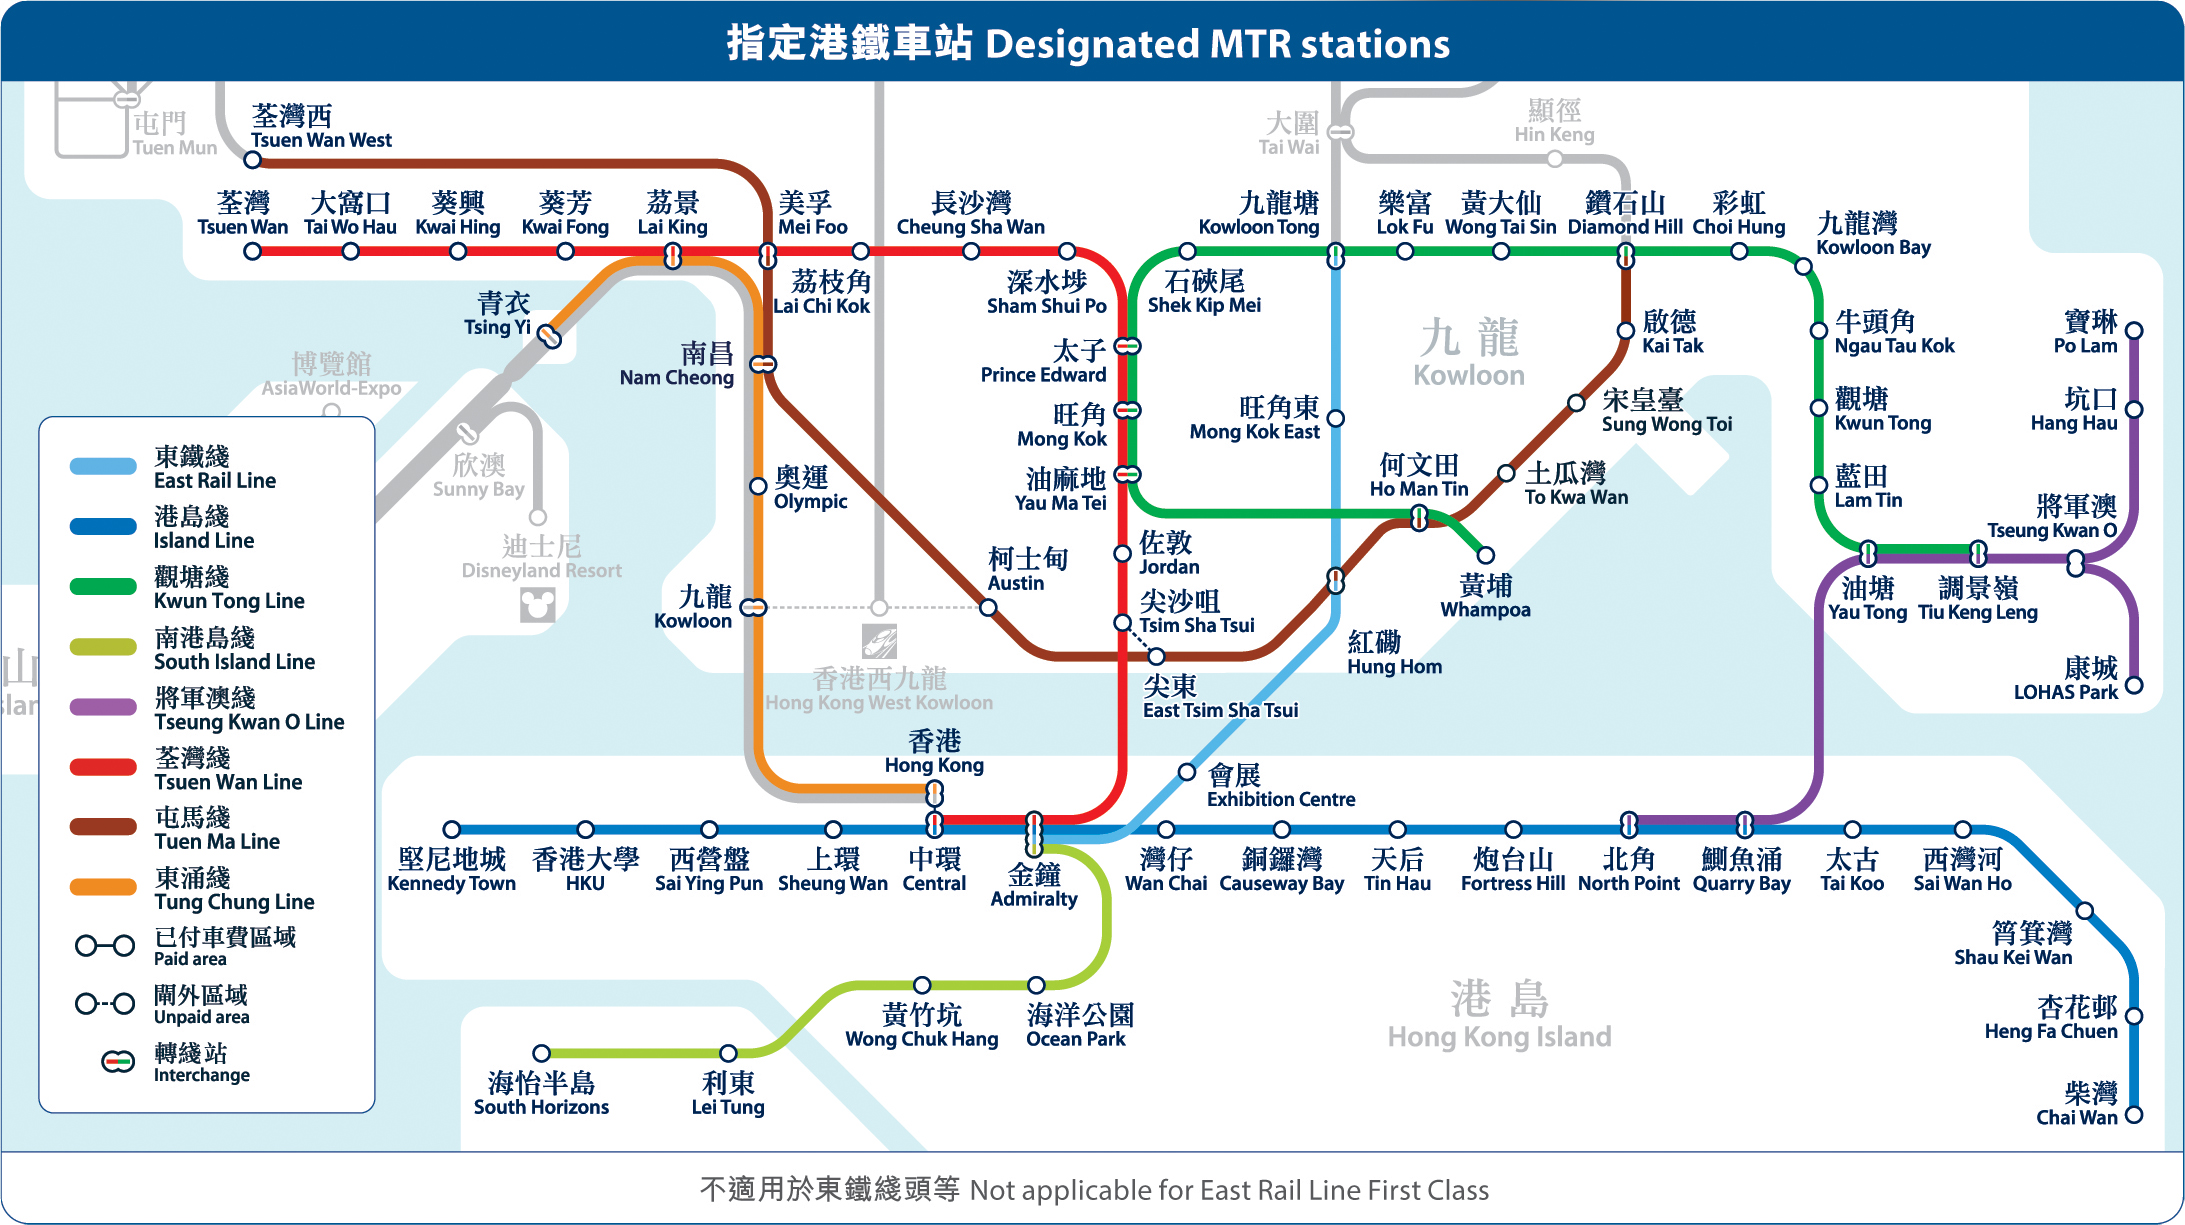 MTR City Saver is valid for travel between designated stations – the Island Line, Kwun Tong Line, Tseung Kwan O Line, Tsuen Wan Line, South Island Line, East Rail Line (stations between Hung Hom and Kowloon Tong), Tung Chung Line (stations between Hong Kong and Tsing Yi), Tuen Ma Line (stations between Diamond Hill and Tsuen Wan West).